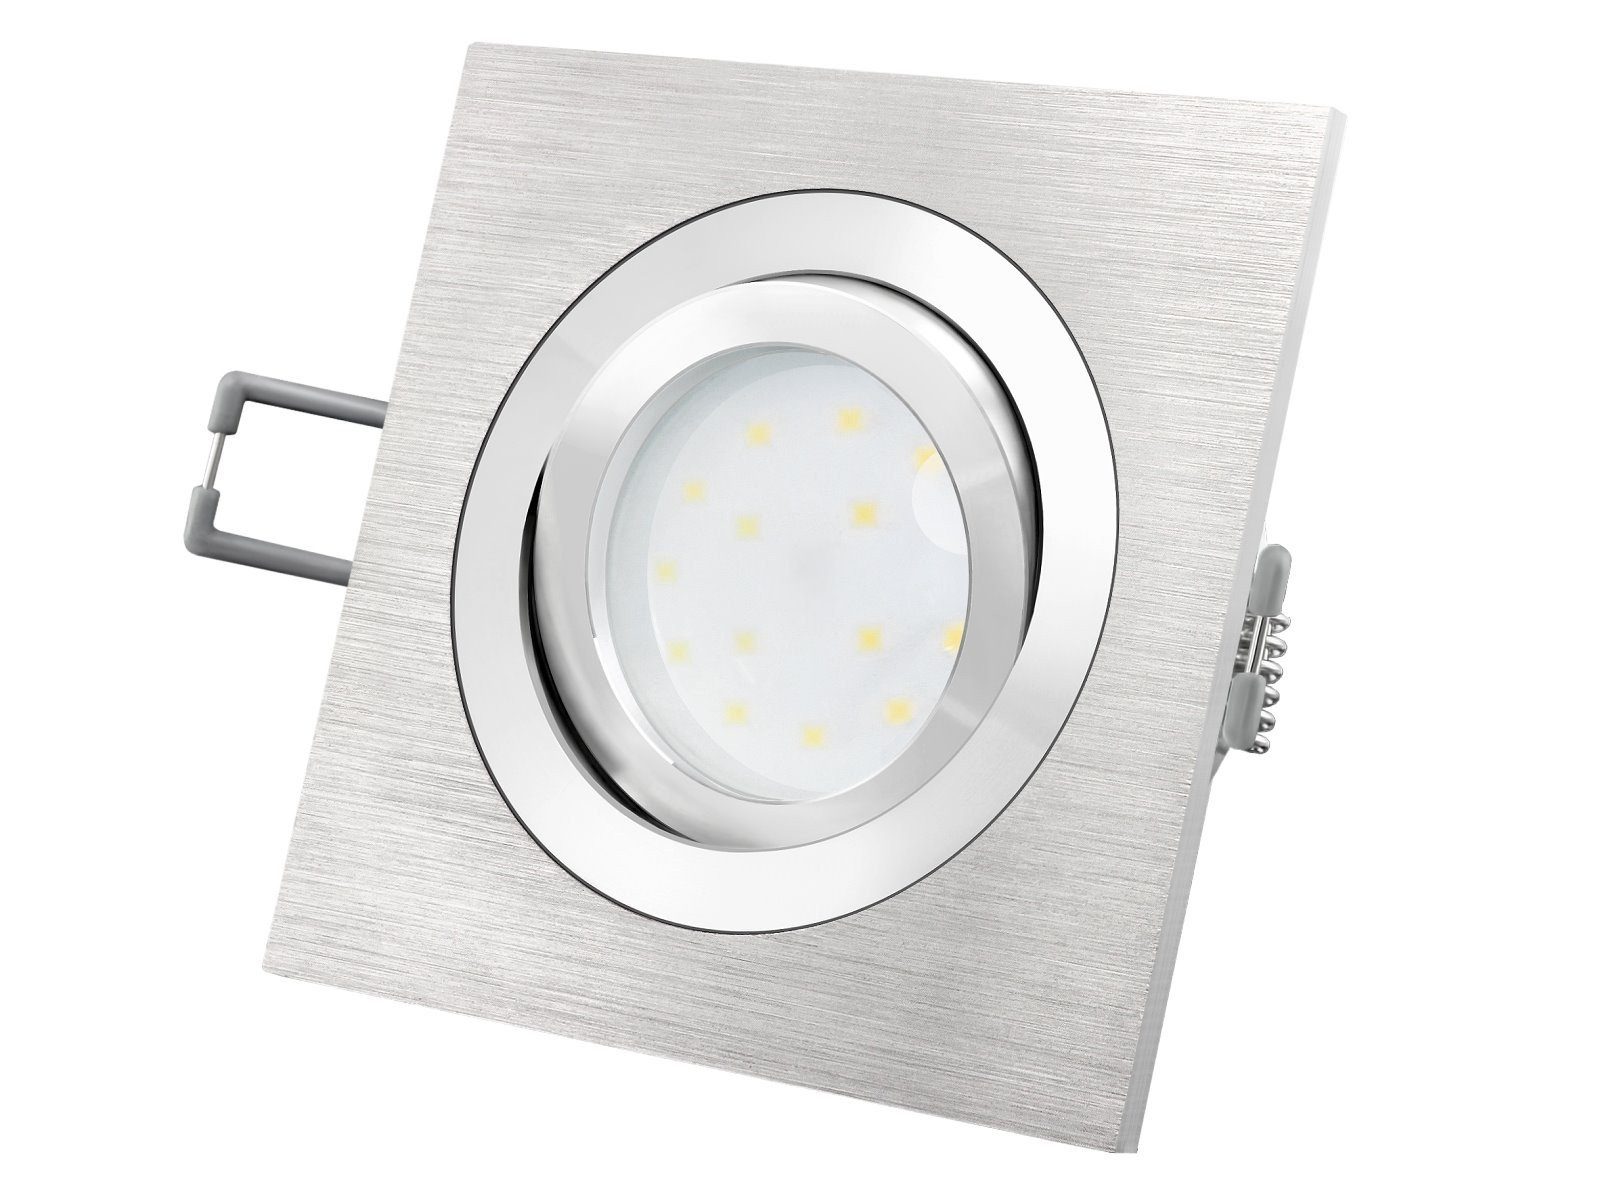 SSC-LUXon LED Einbaustrahler QF-2 Alu LED-Einbaustrahler flach schwenkbar, LED-Modul 230V, 5W, Neutralweiß